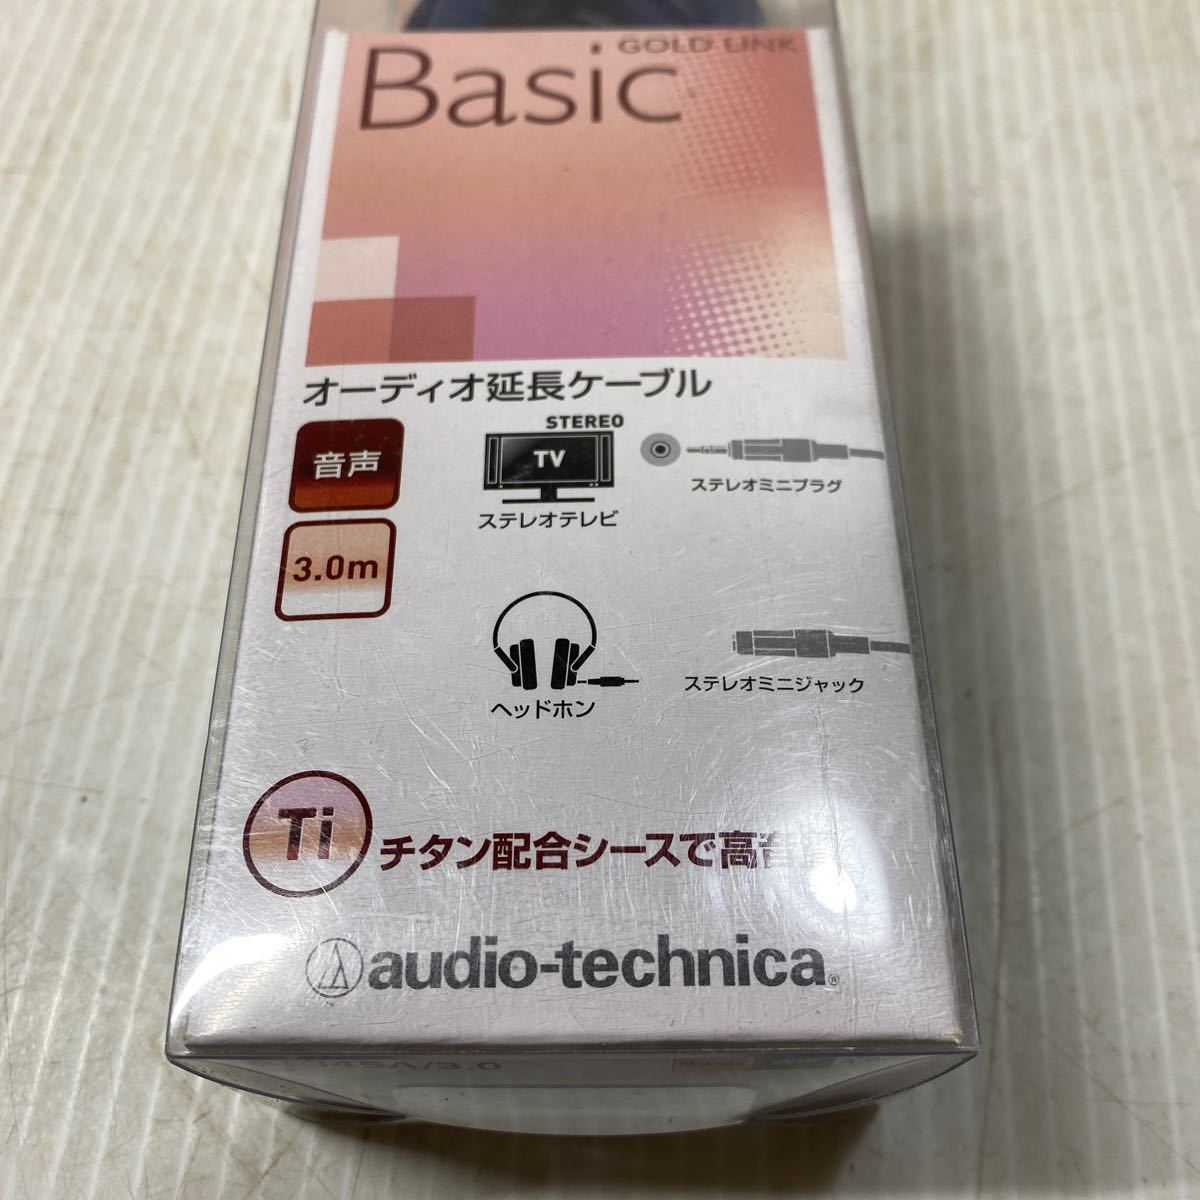 audio-technica GOLD LINK Basic オーディオ延長ケーブル 3.0m AT345A/3.0_画像2